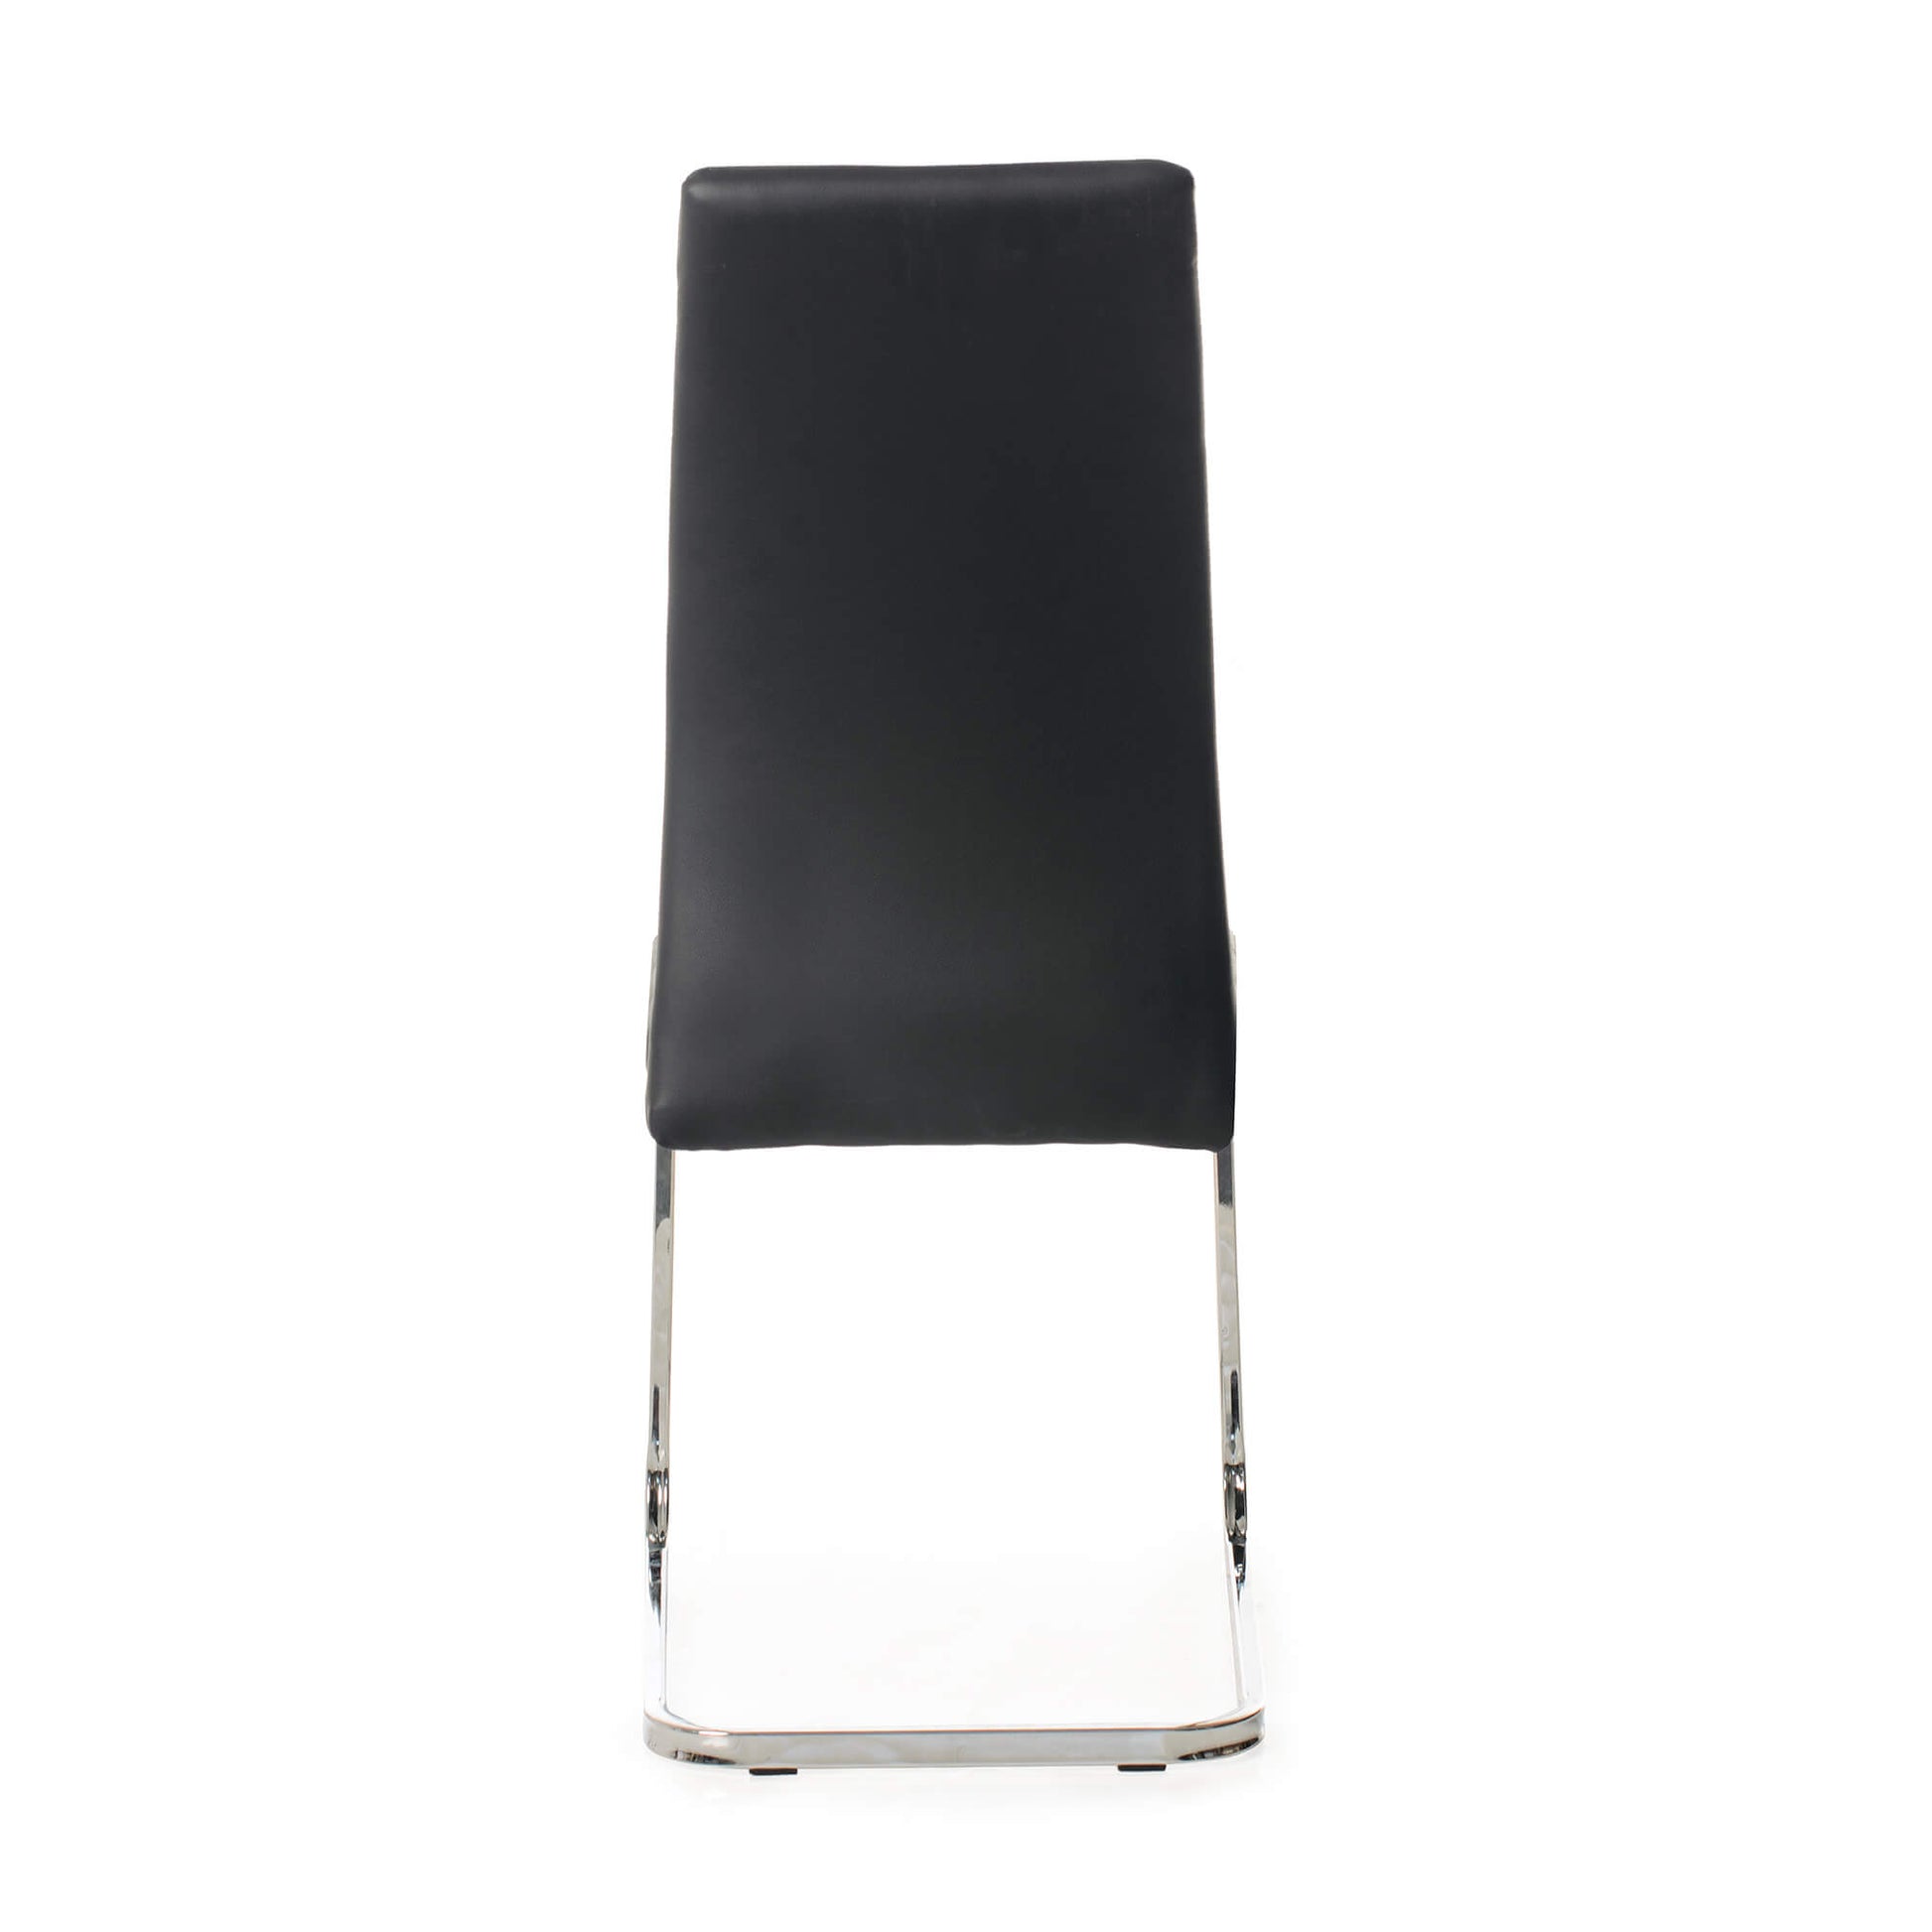 Montessa | Modern, Metal PU Leather Dining Chairs | Set Of 4 | Black